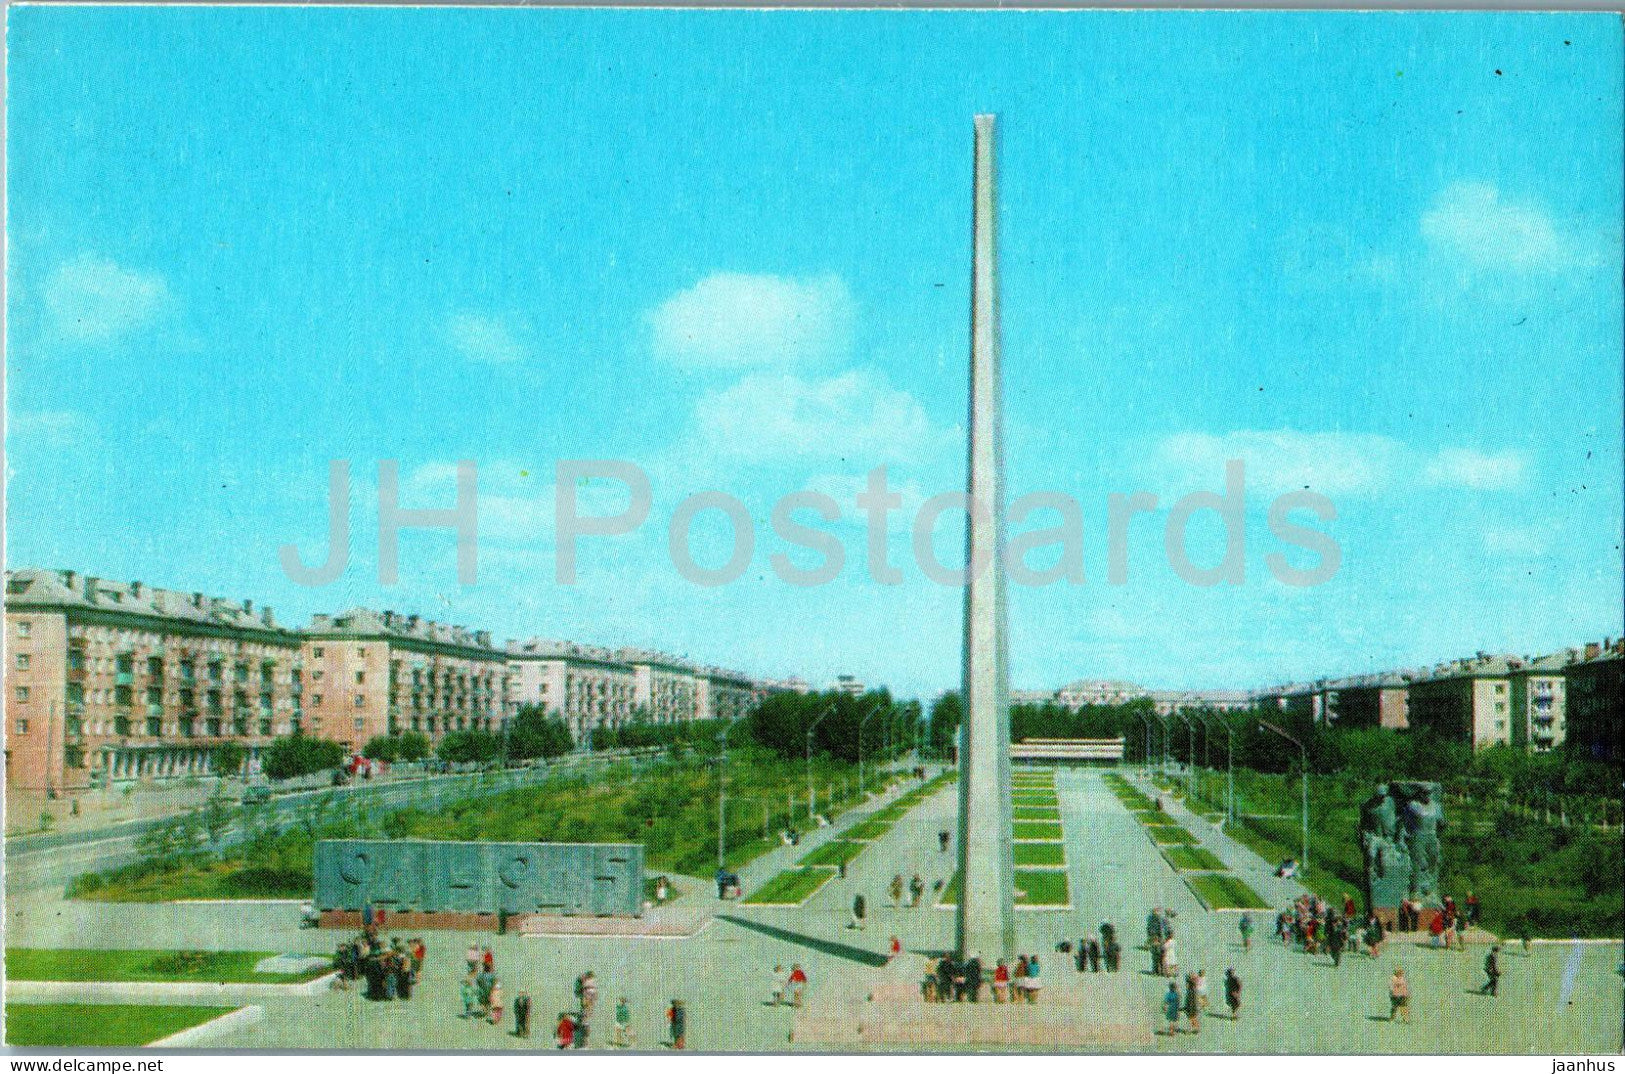 Nizhny Tagil - Glory Square - 1973 - Russia USSR - unused - JH Postcards